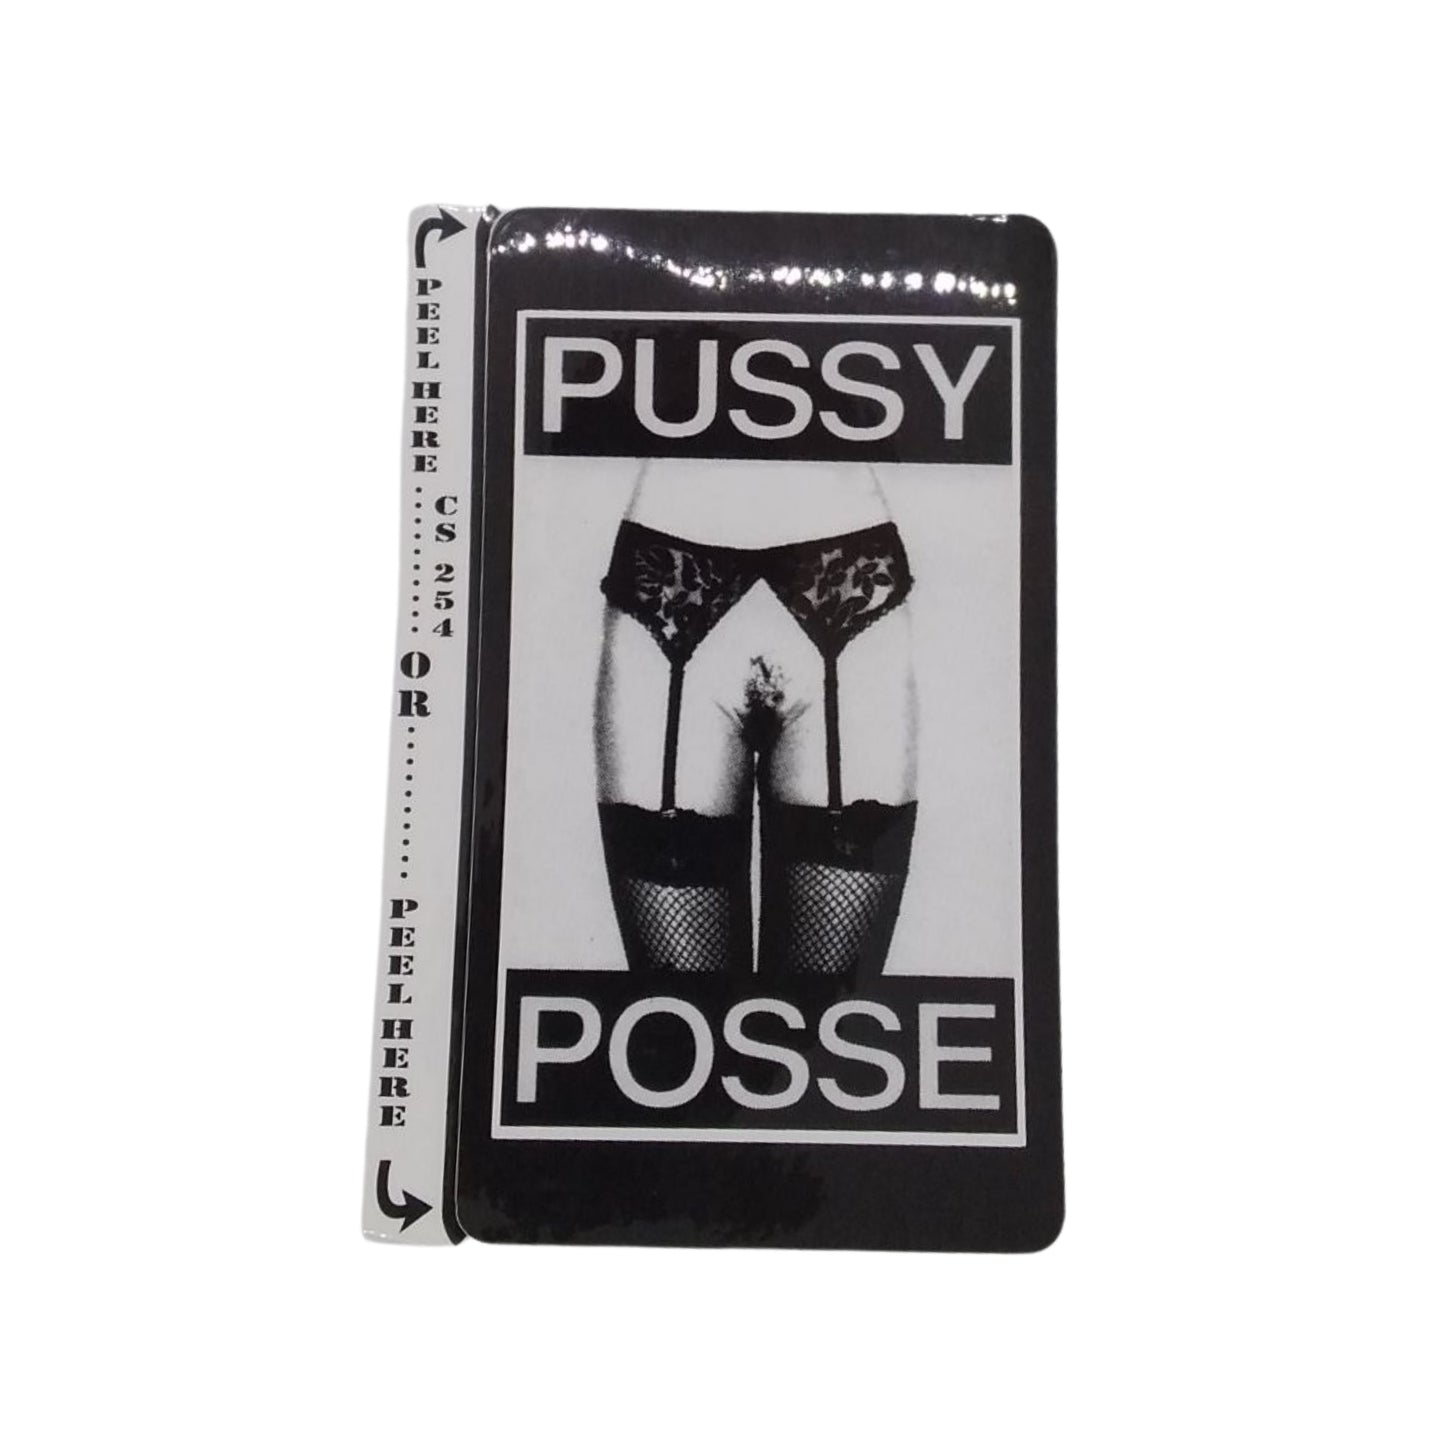 Pussy Posse Uncensored - Sticker